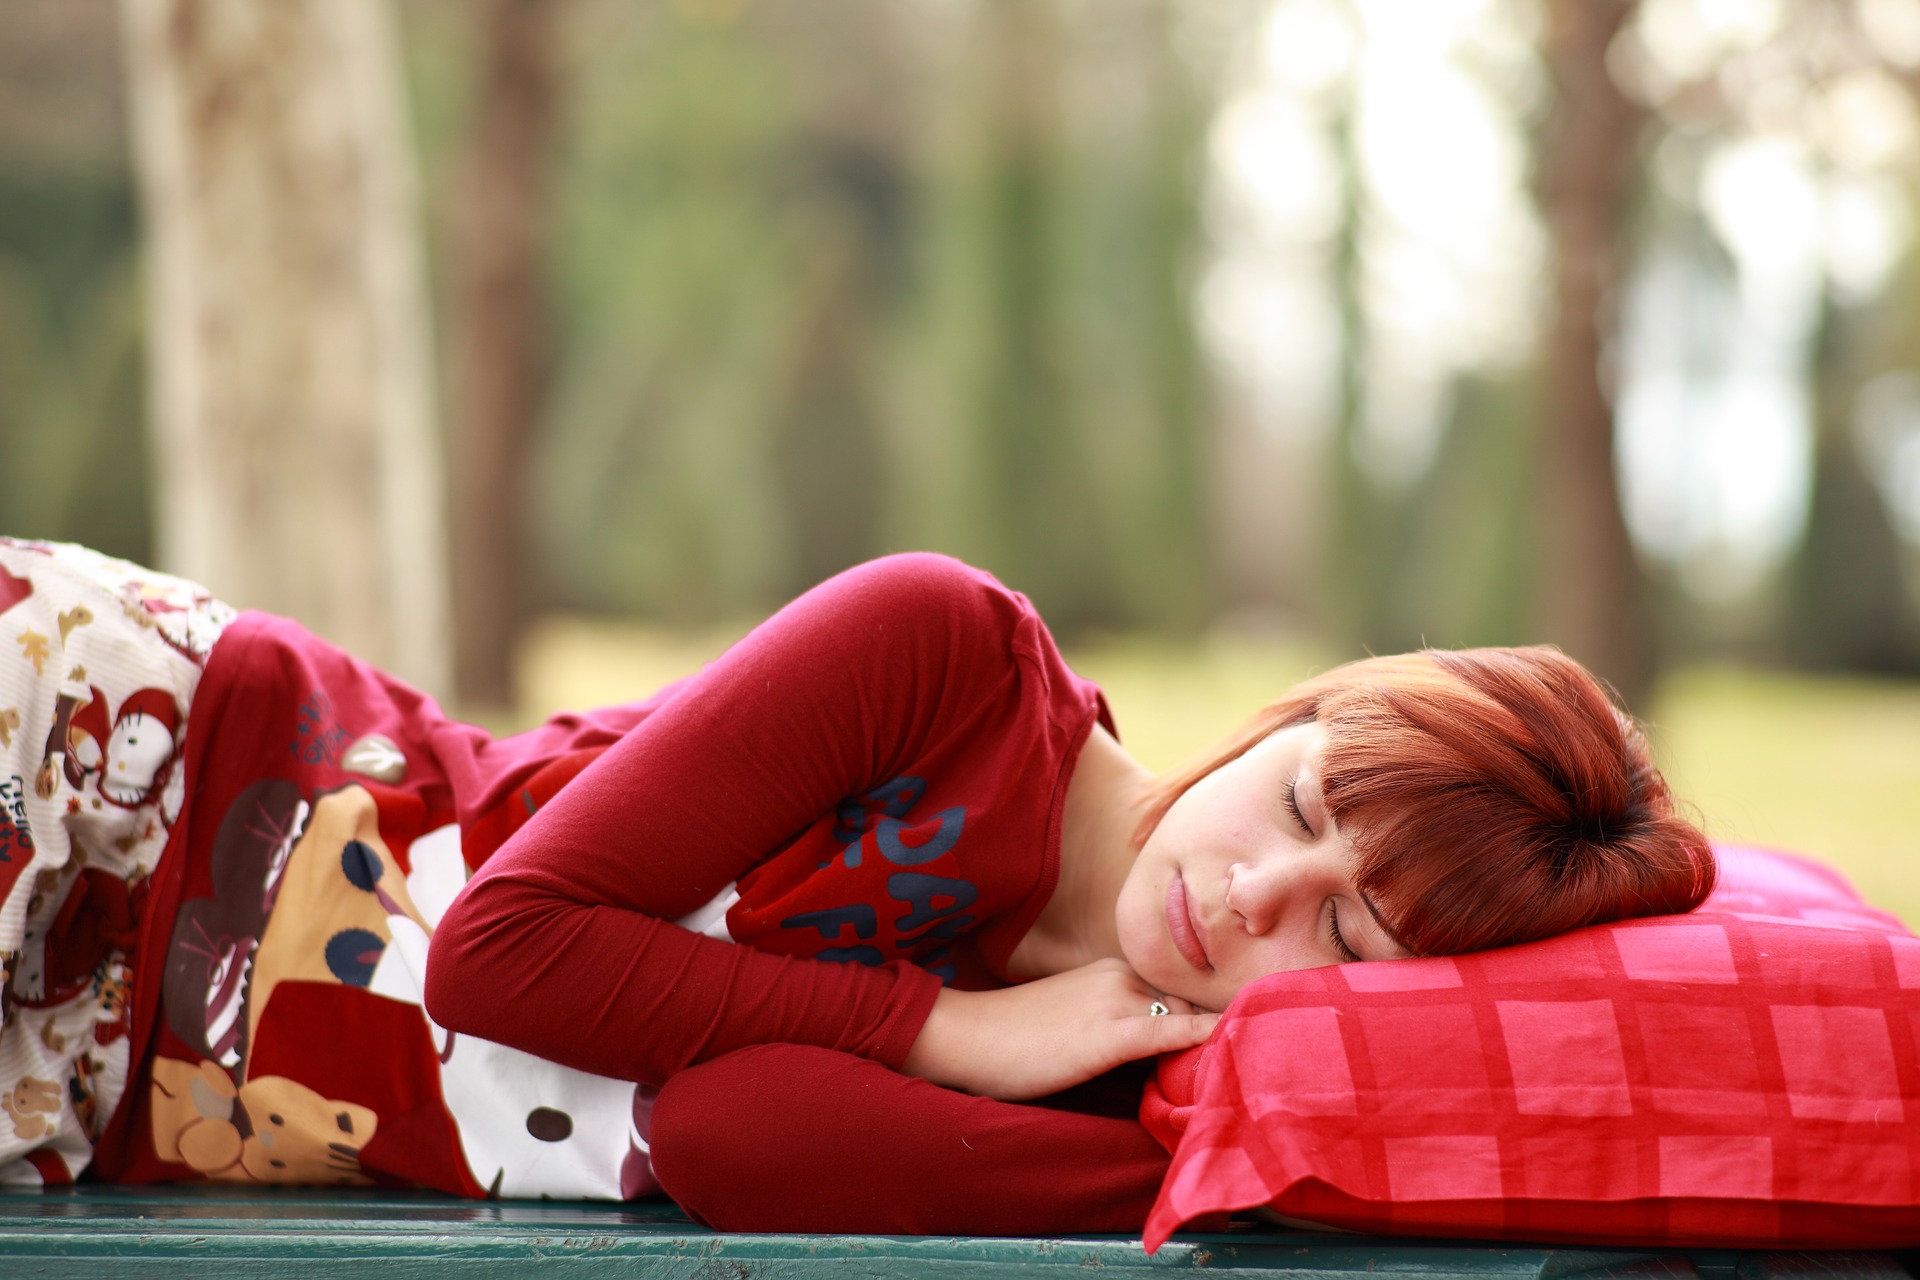 Avoid Sleeping Disorders With the Best Sleep Hygiene Tips